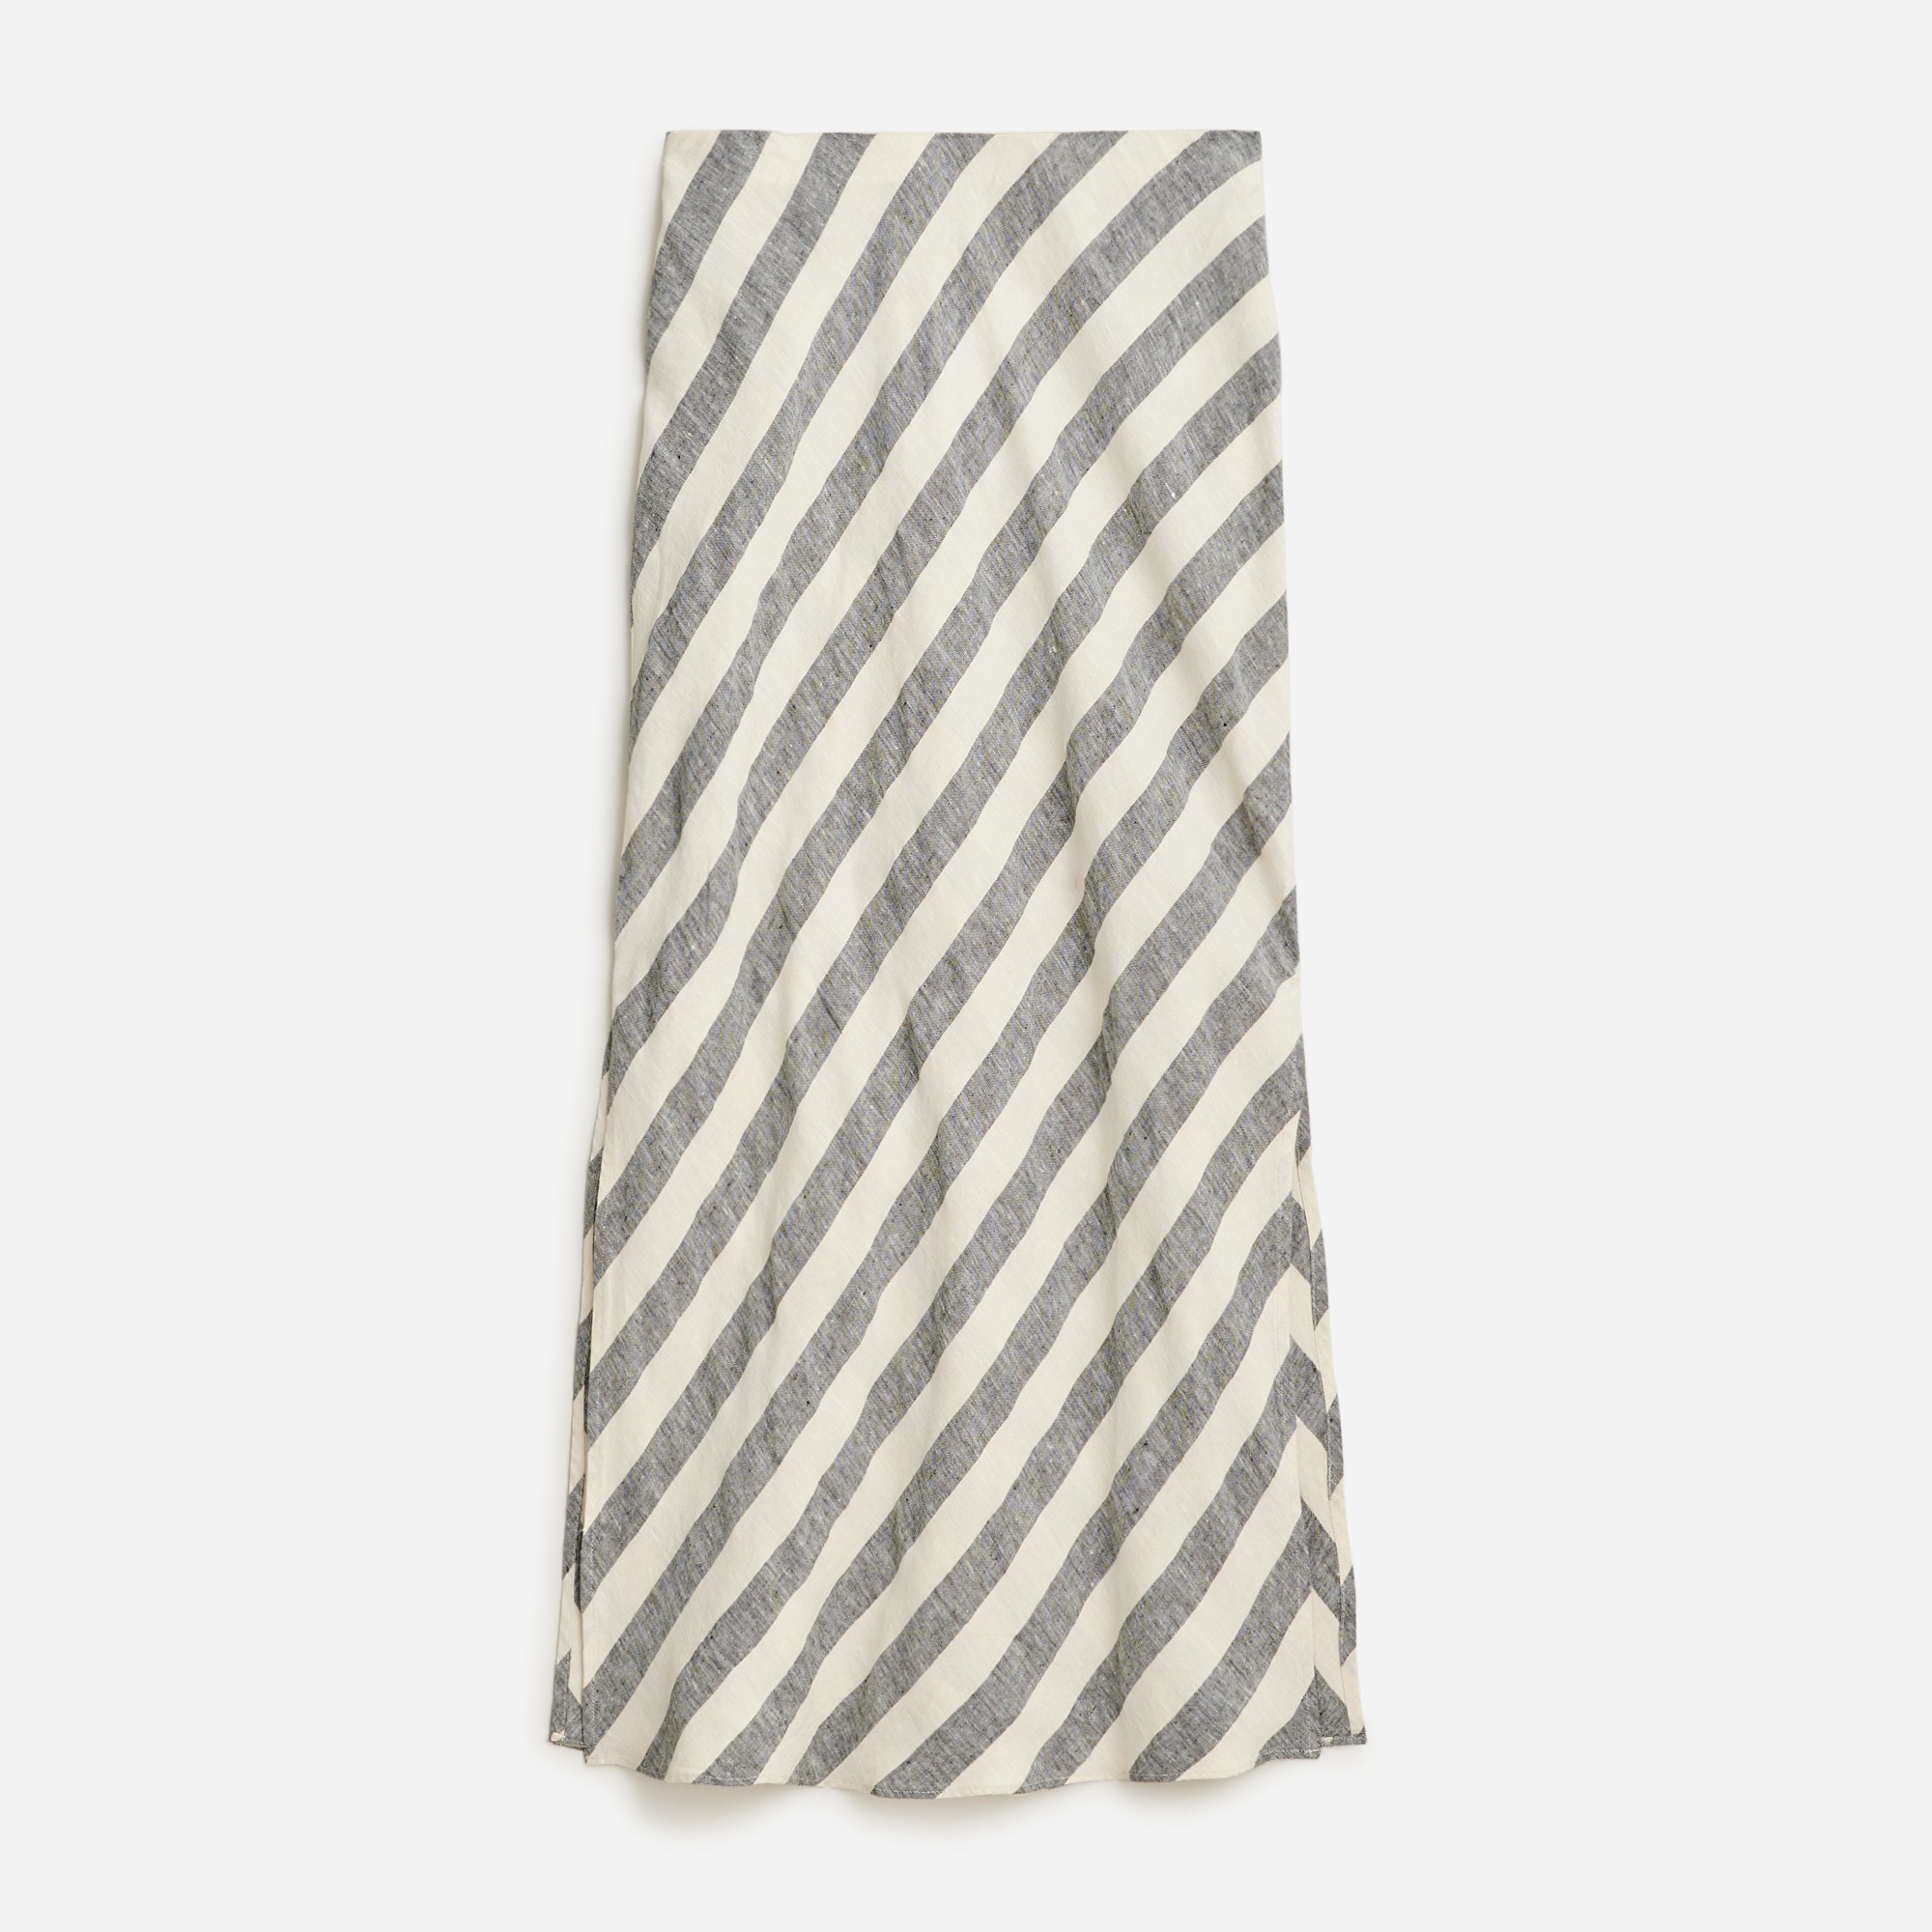  Gwyneth slip skirt in striped linen